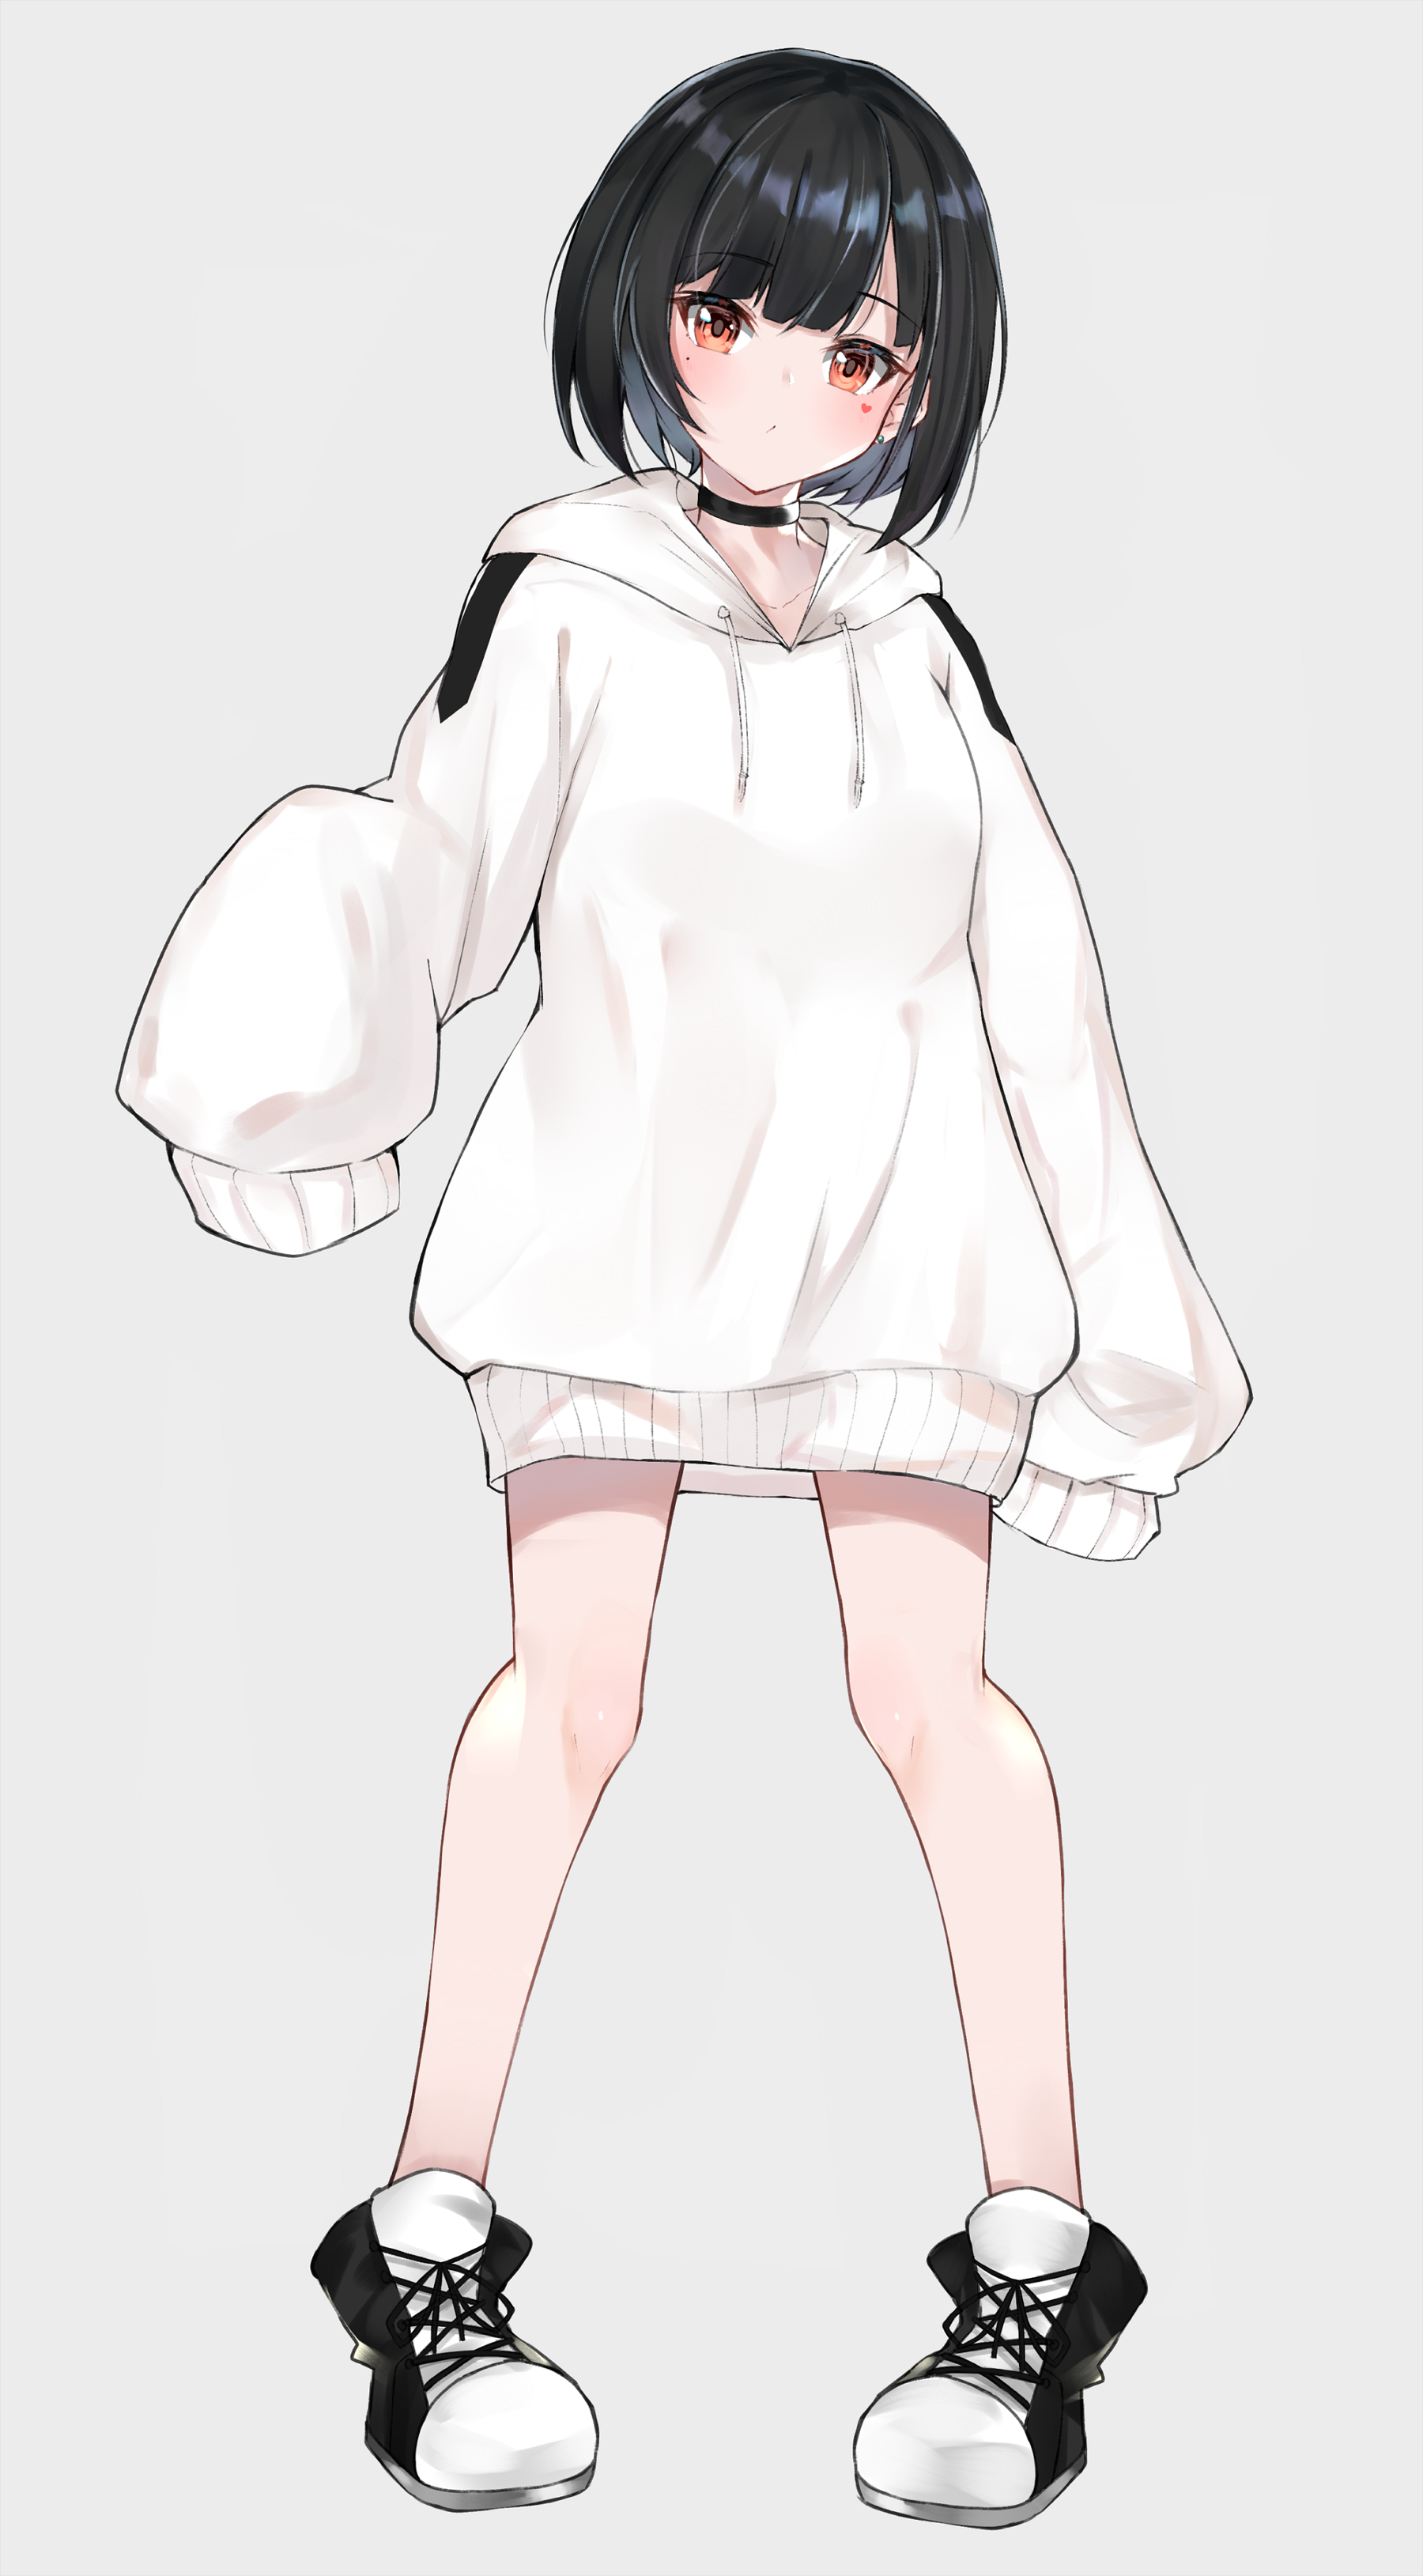 Anime Characters Wearing Hoodies Love anime girl t-shirt design